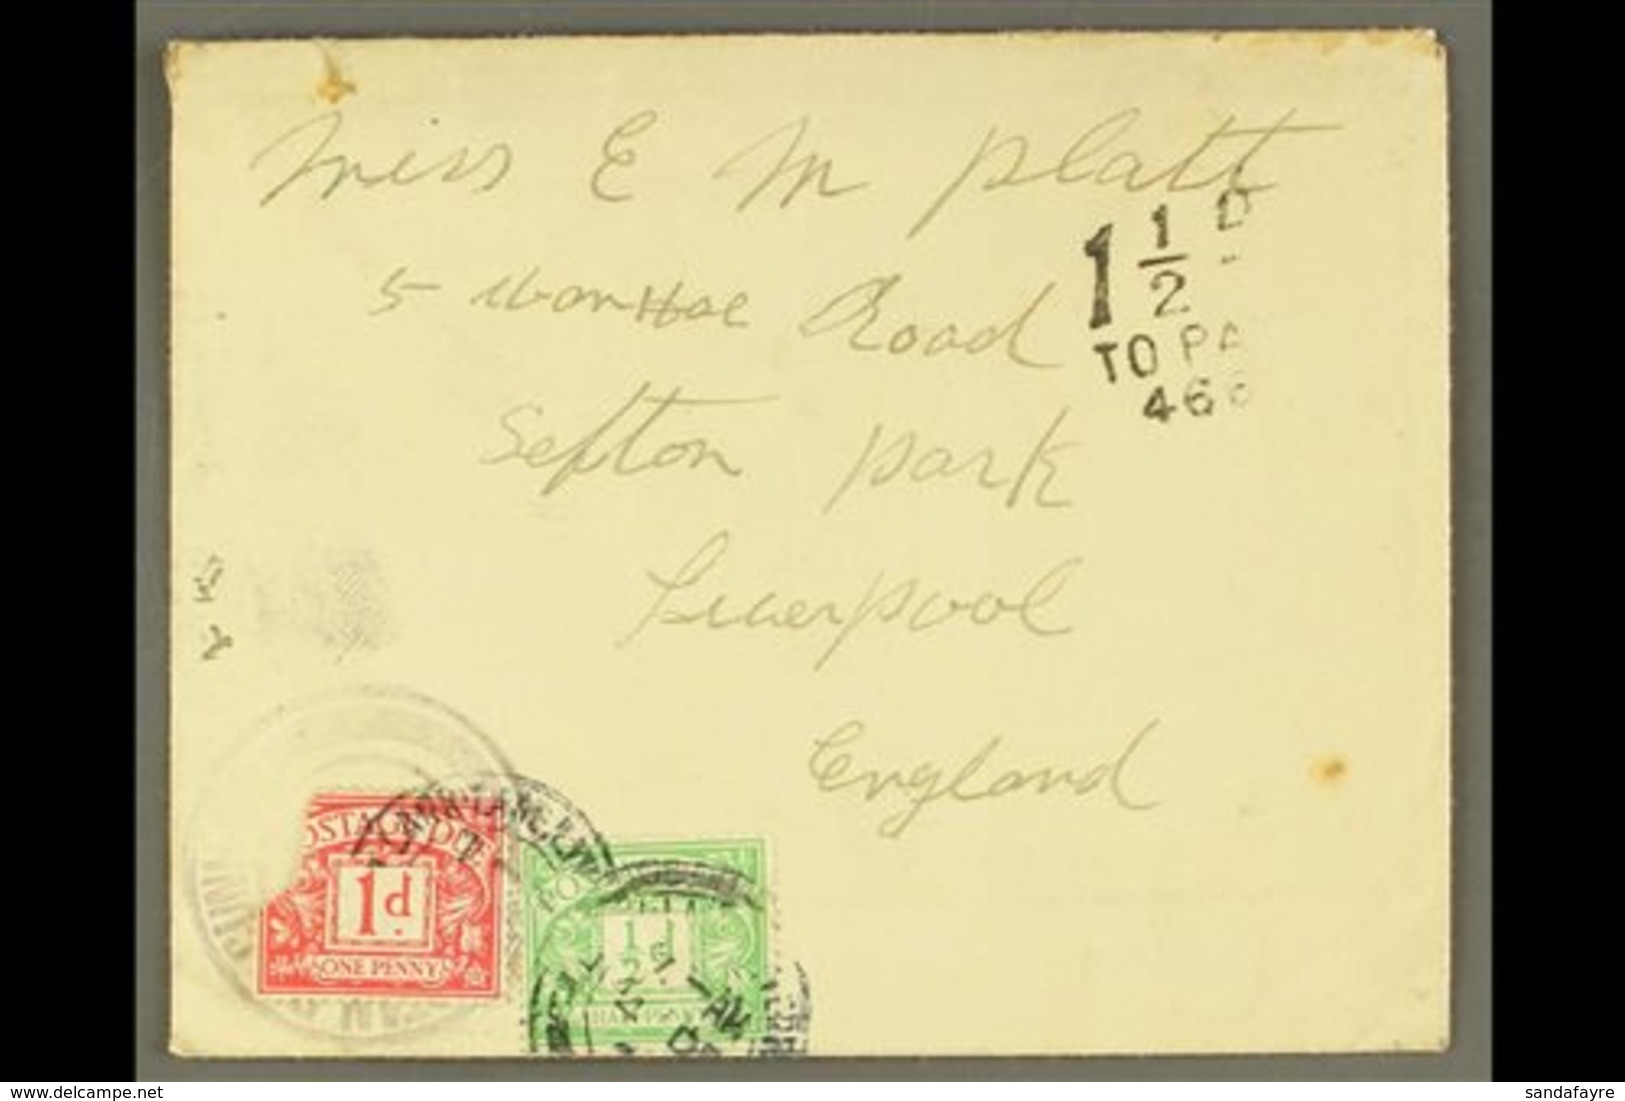 SCARCE COMMERCIAL COVER Circa 1928 Envelope To England Bearing Type II Cachet (SG C2); On Arrival In England Handstamped - Tristan Da Cunha